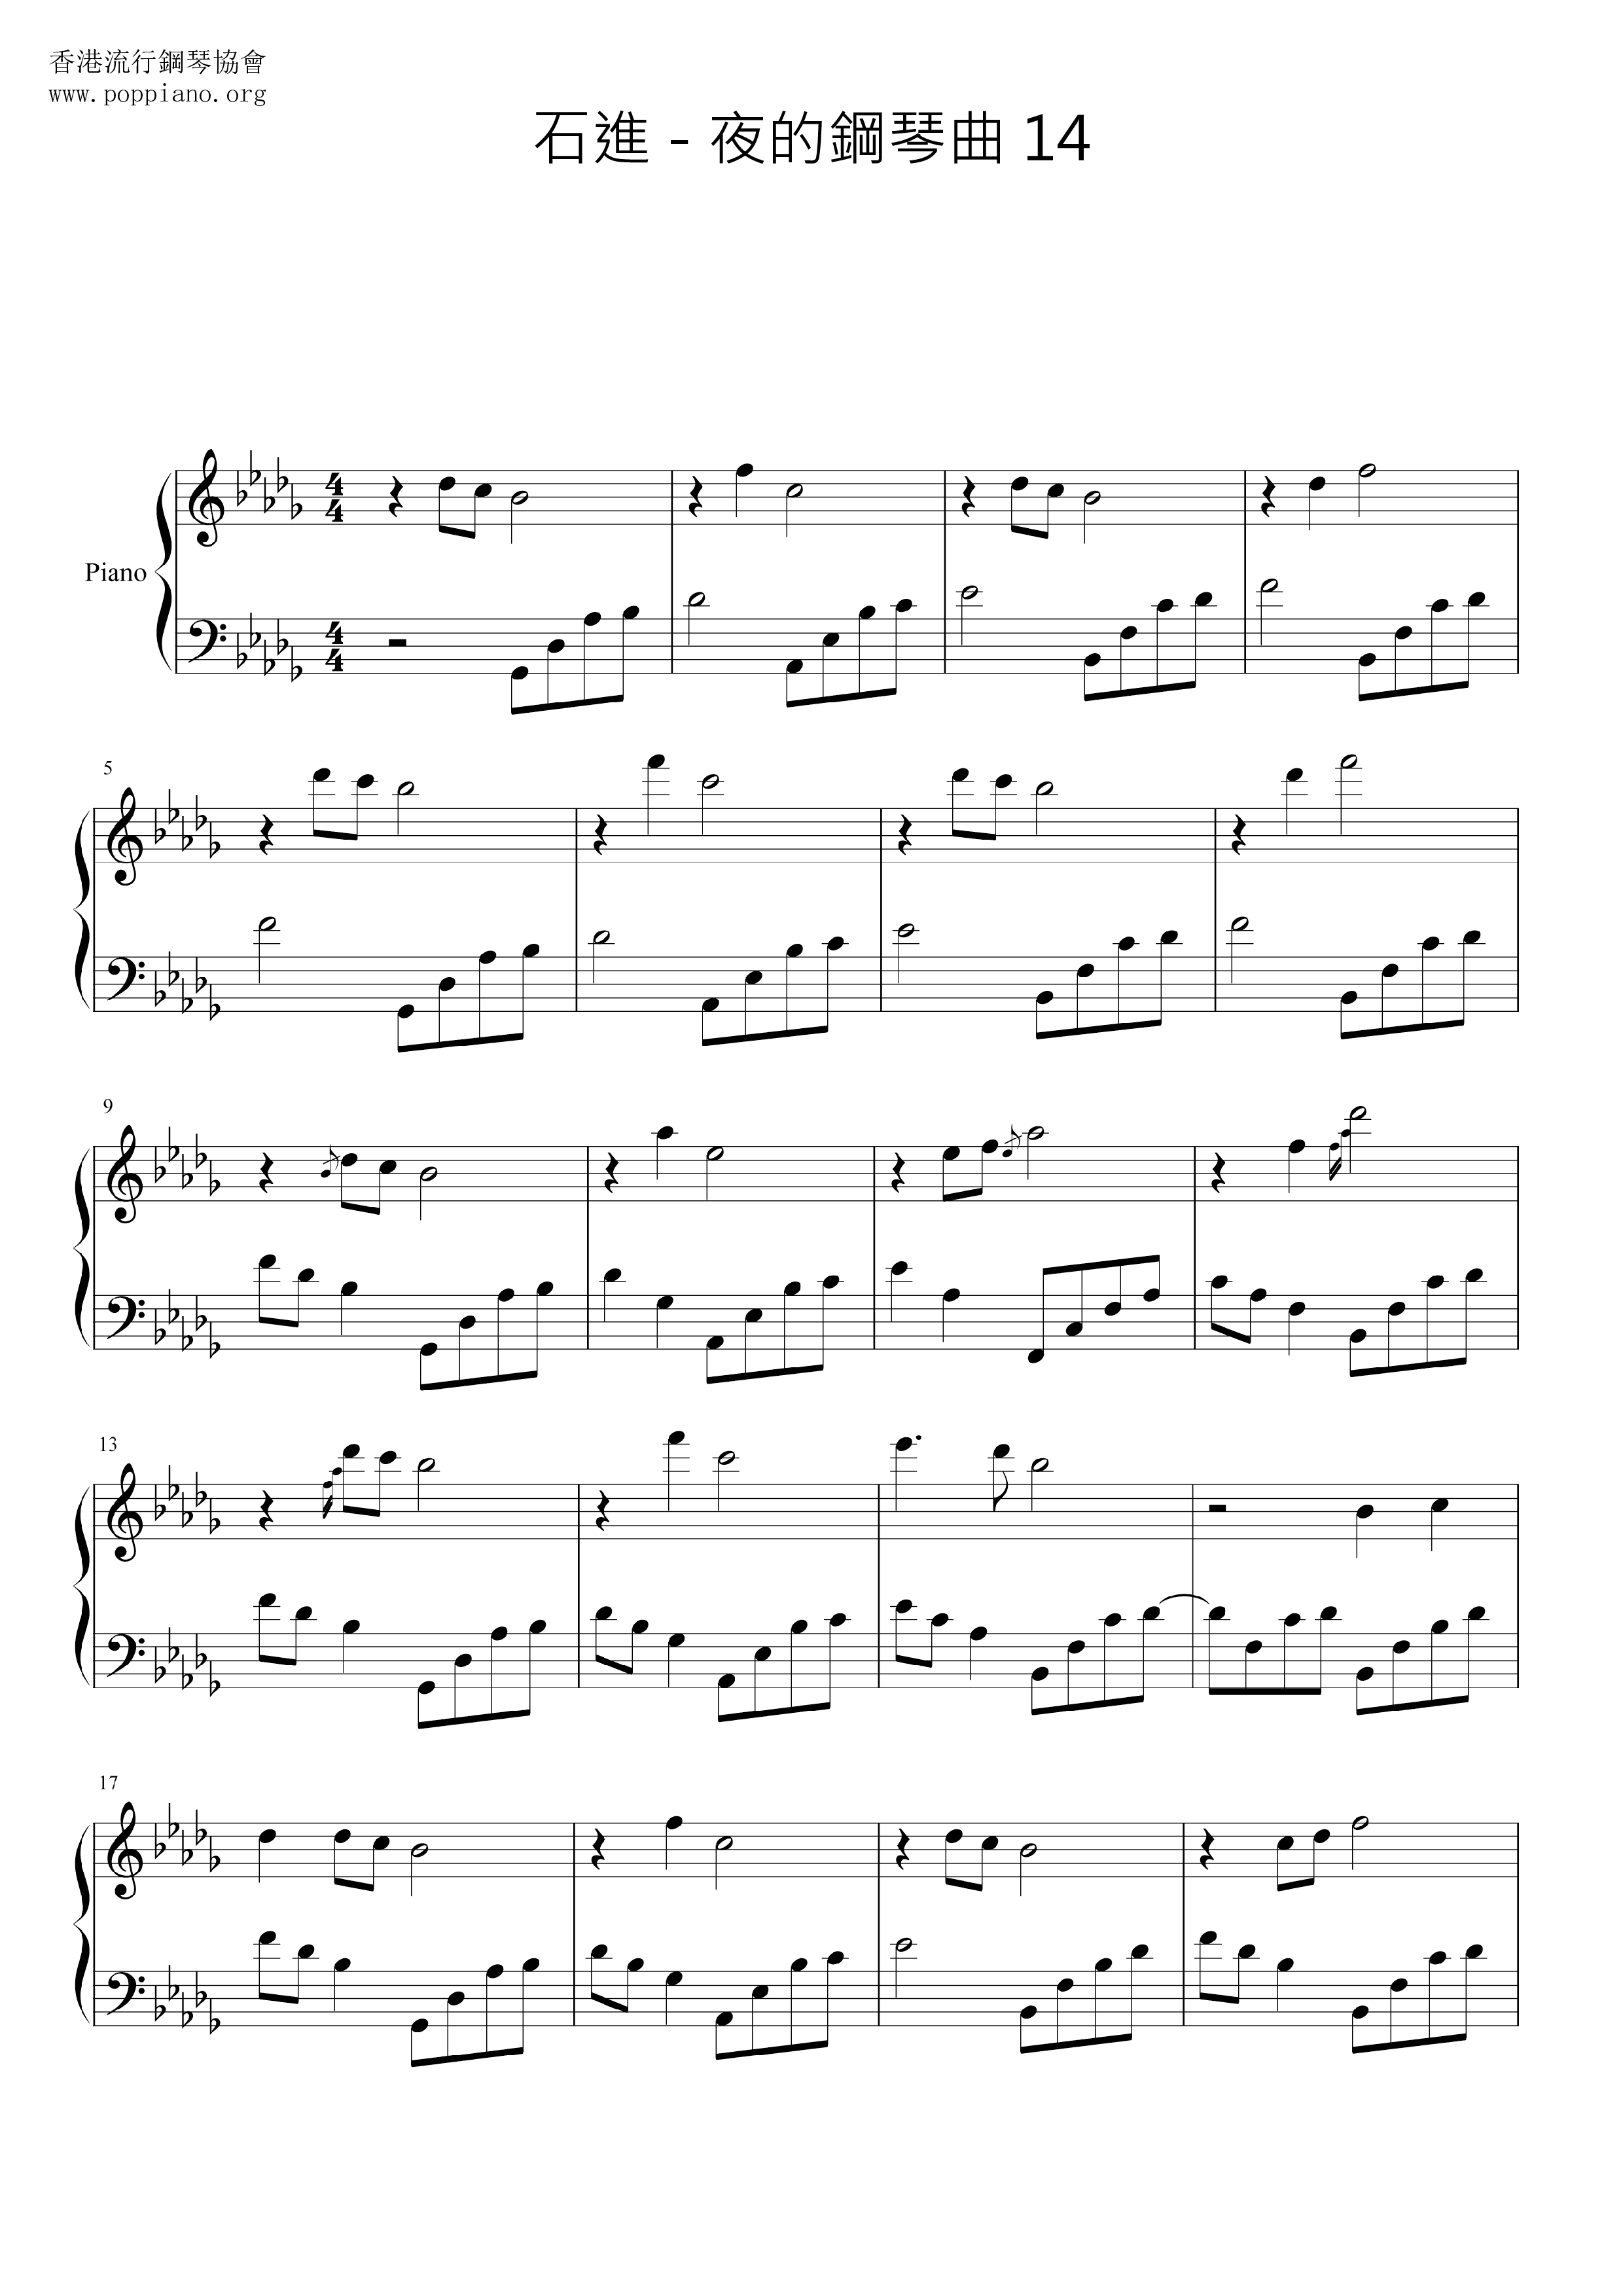 Melody Of The Night 14 Score